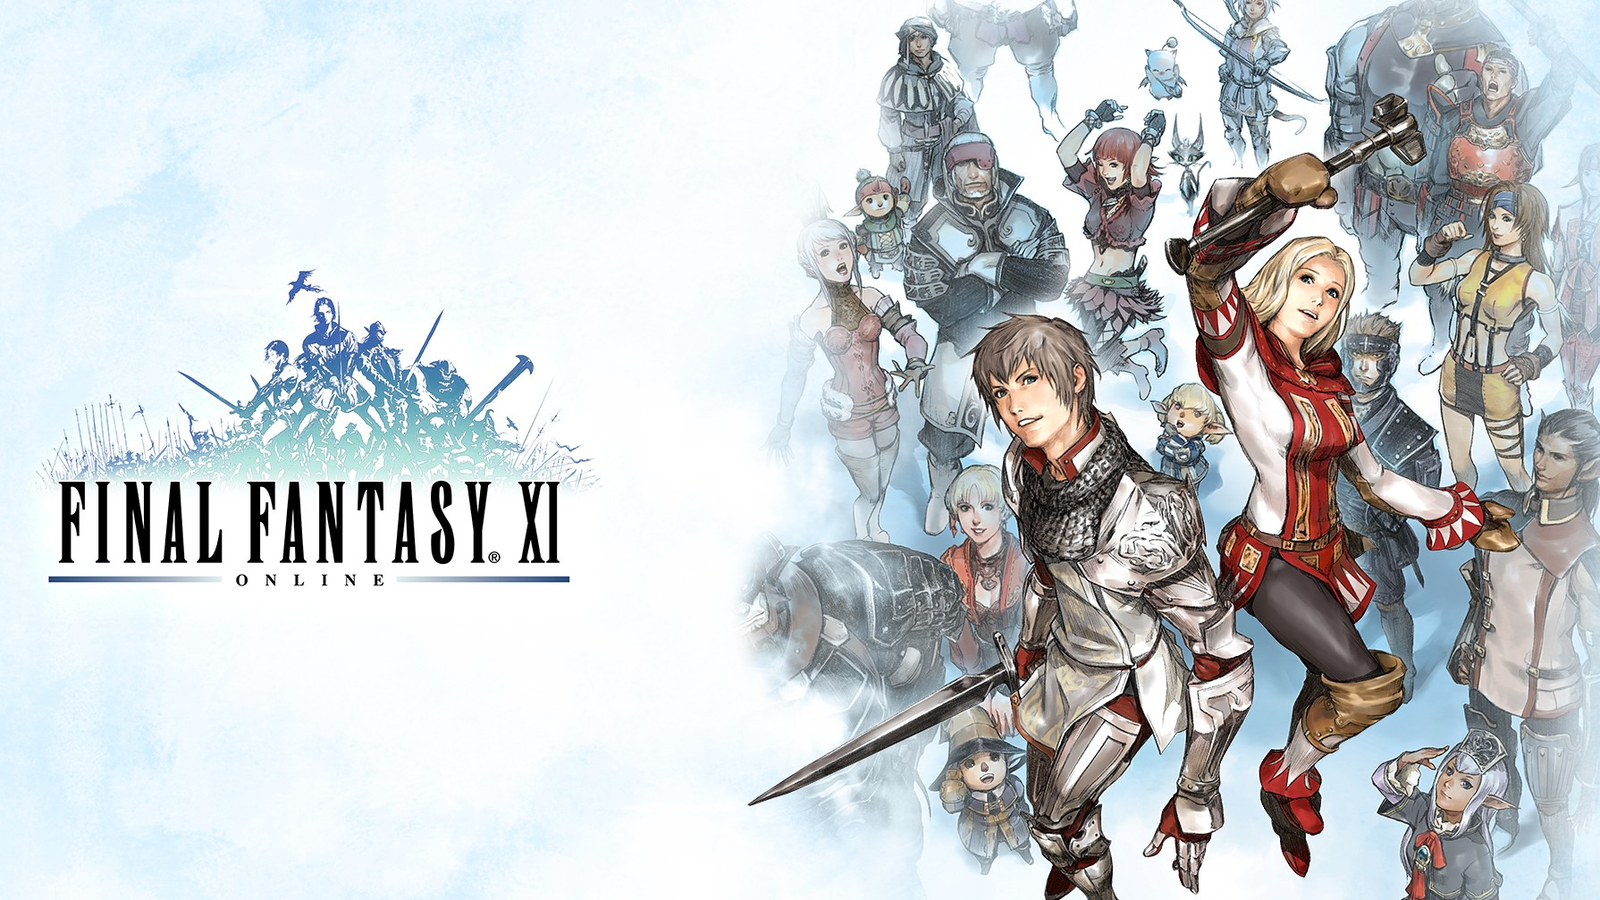 How long is Final Fantasy XI?